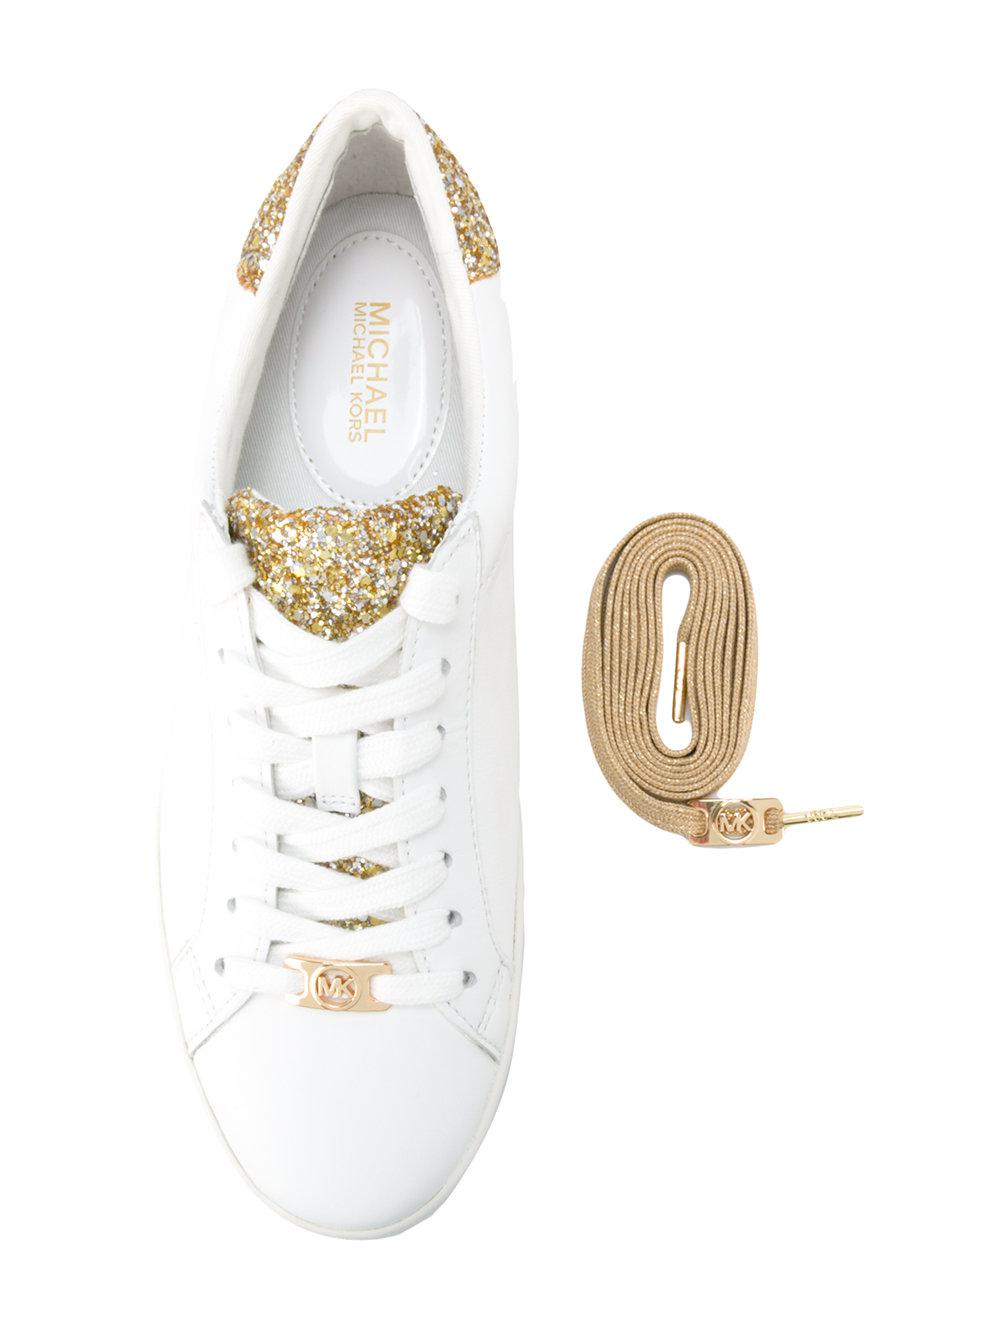 Michael Kors Glitter Detail Sneakers in White | Lyst